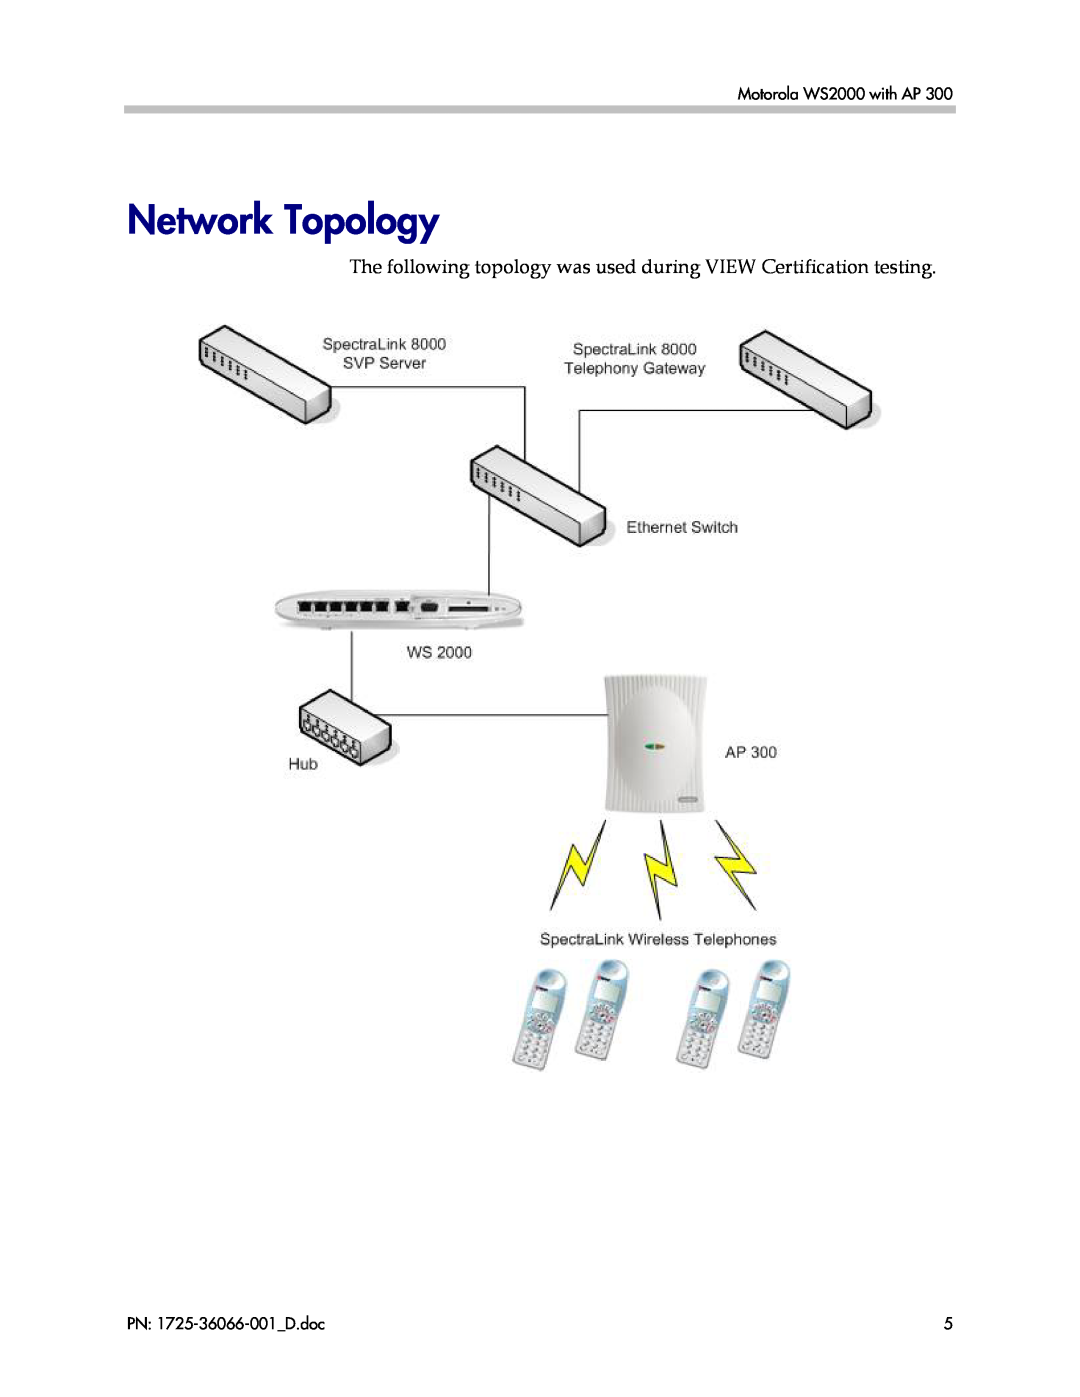 Motorola WS 2000 with AP 300 manual Network Topology, Motorola WS2000 with AP, PN 1725-36066-001 D.doc 